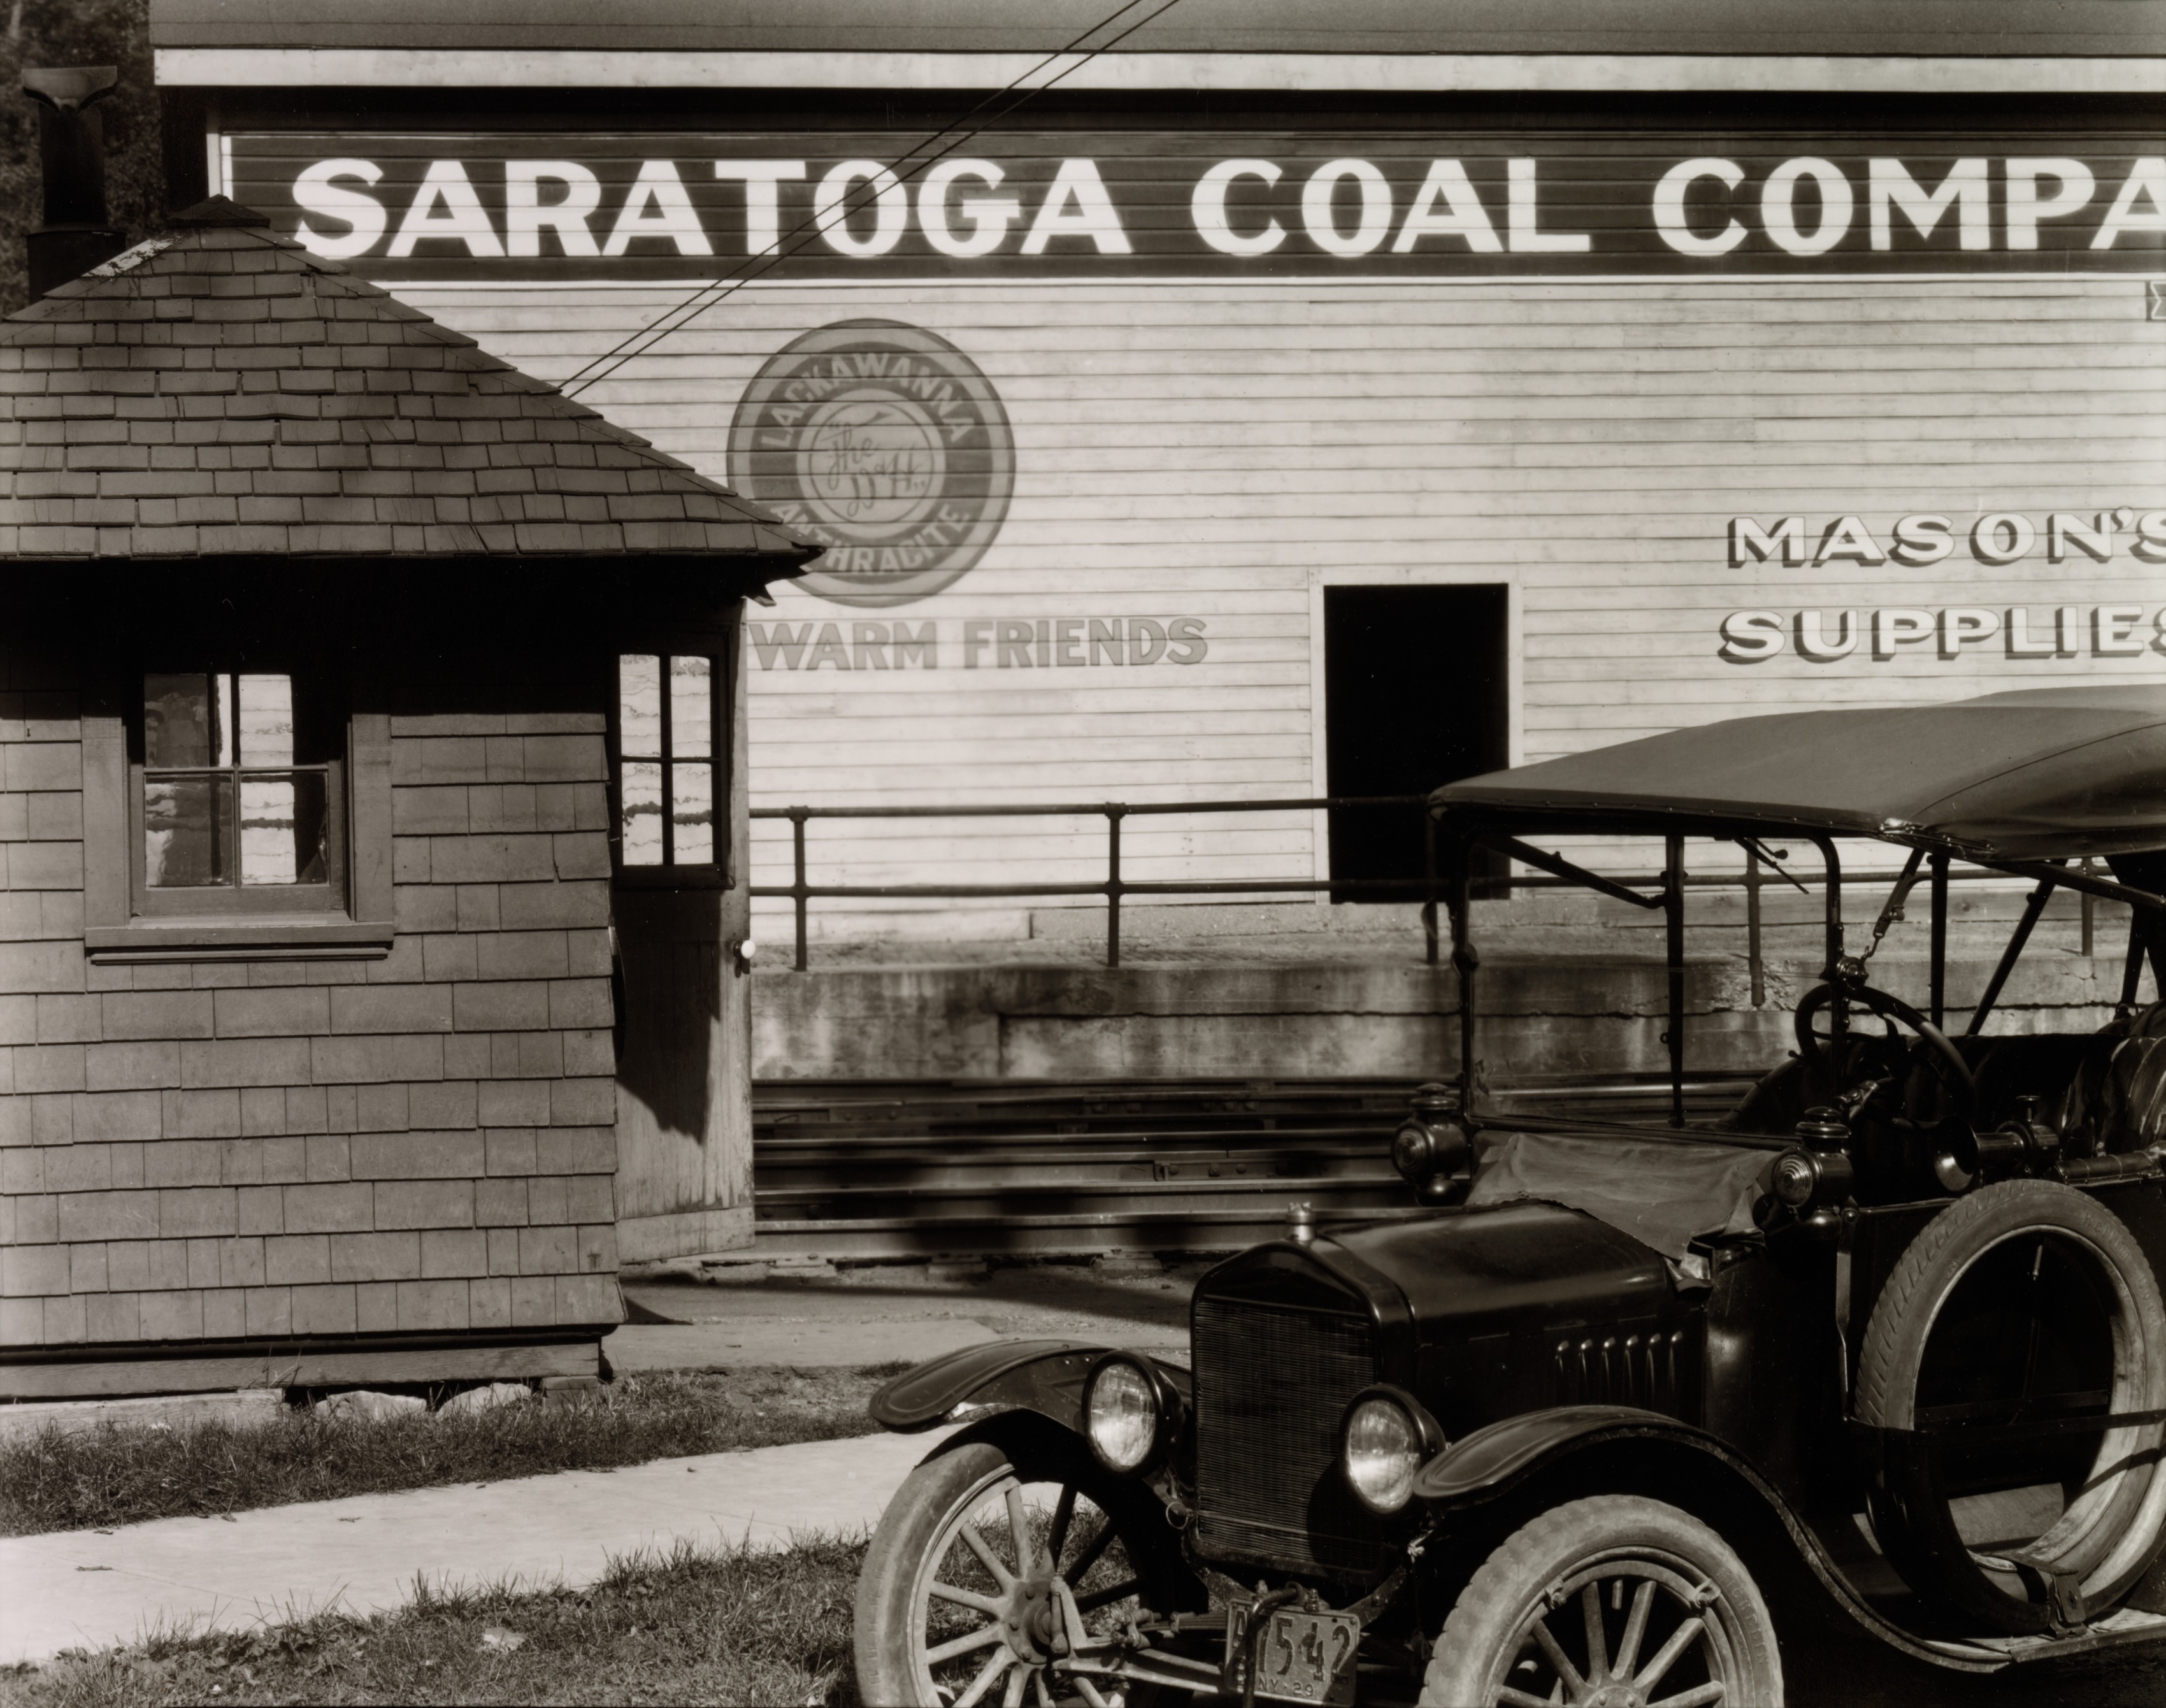 Saratoga Coal Makes Warm Friends